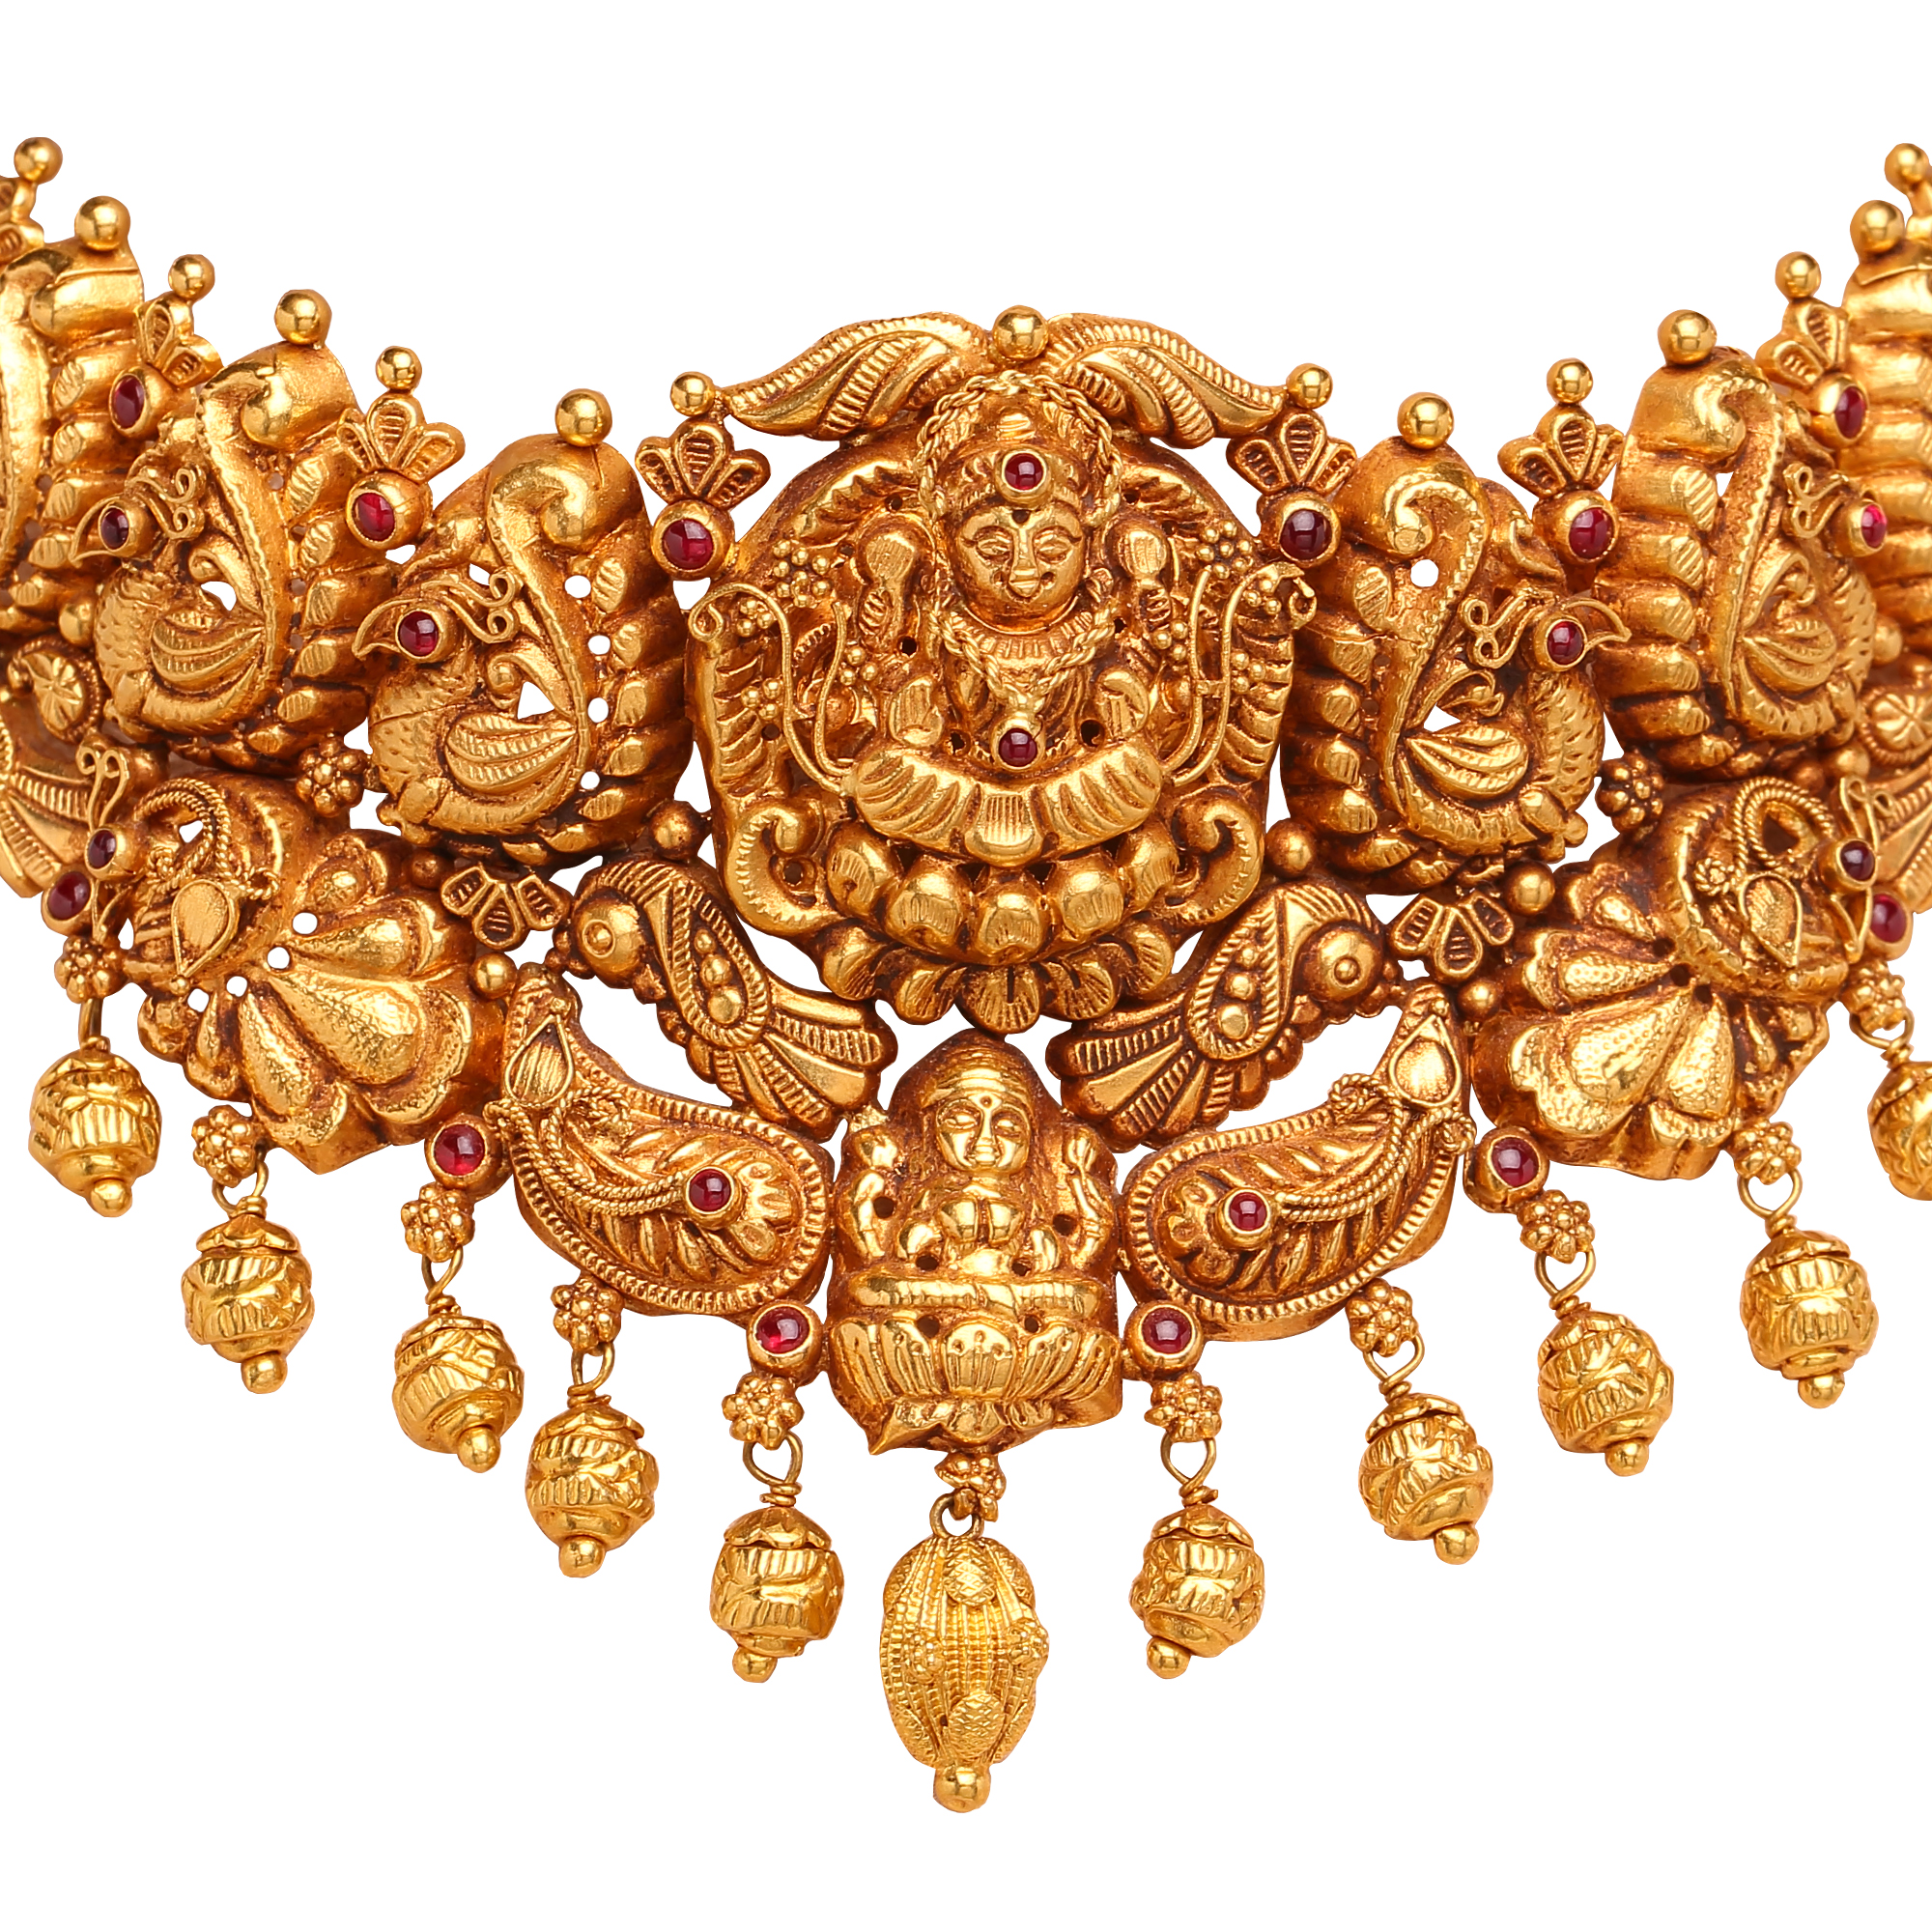 Divine Gold Necklace